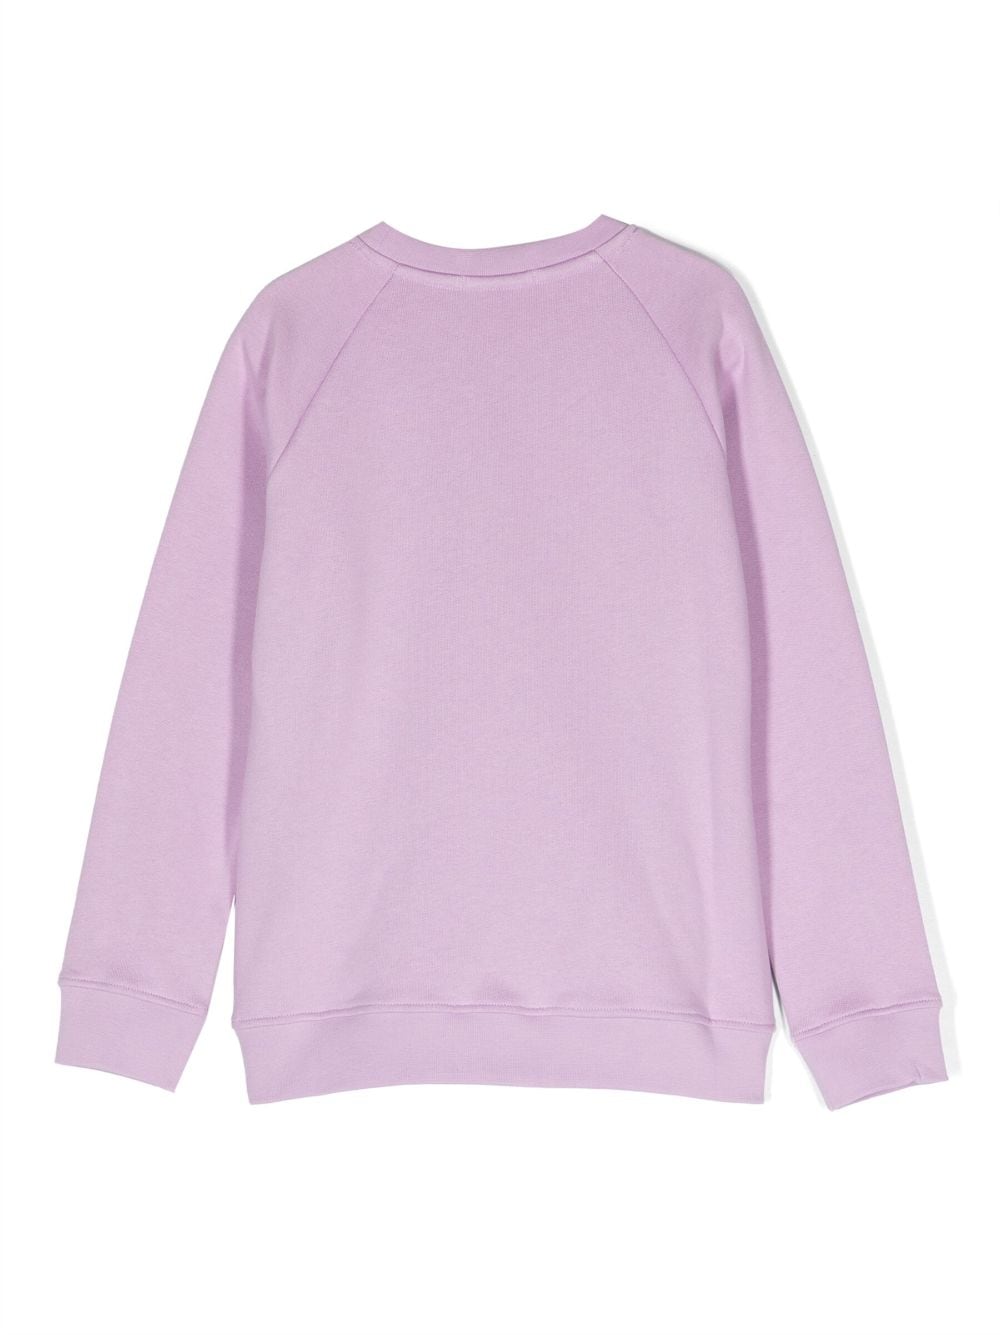 Stella McCartney Kids unicorn-print cotton sweatshirt - Paars